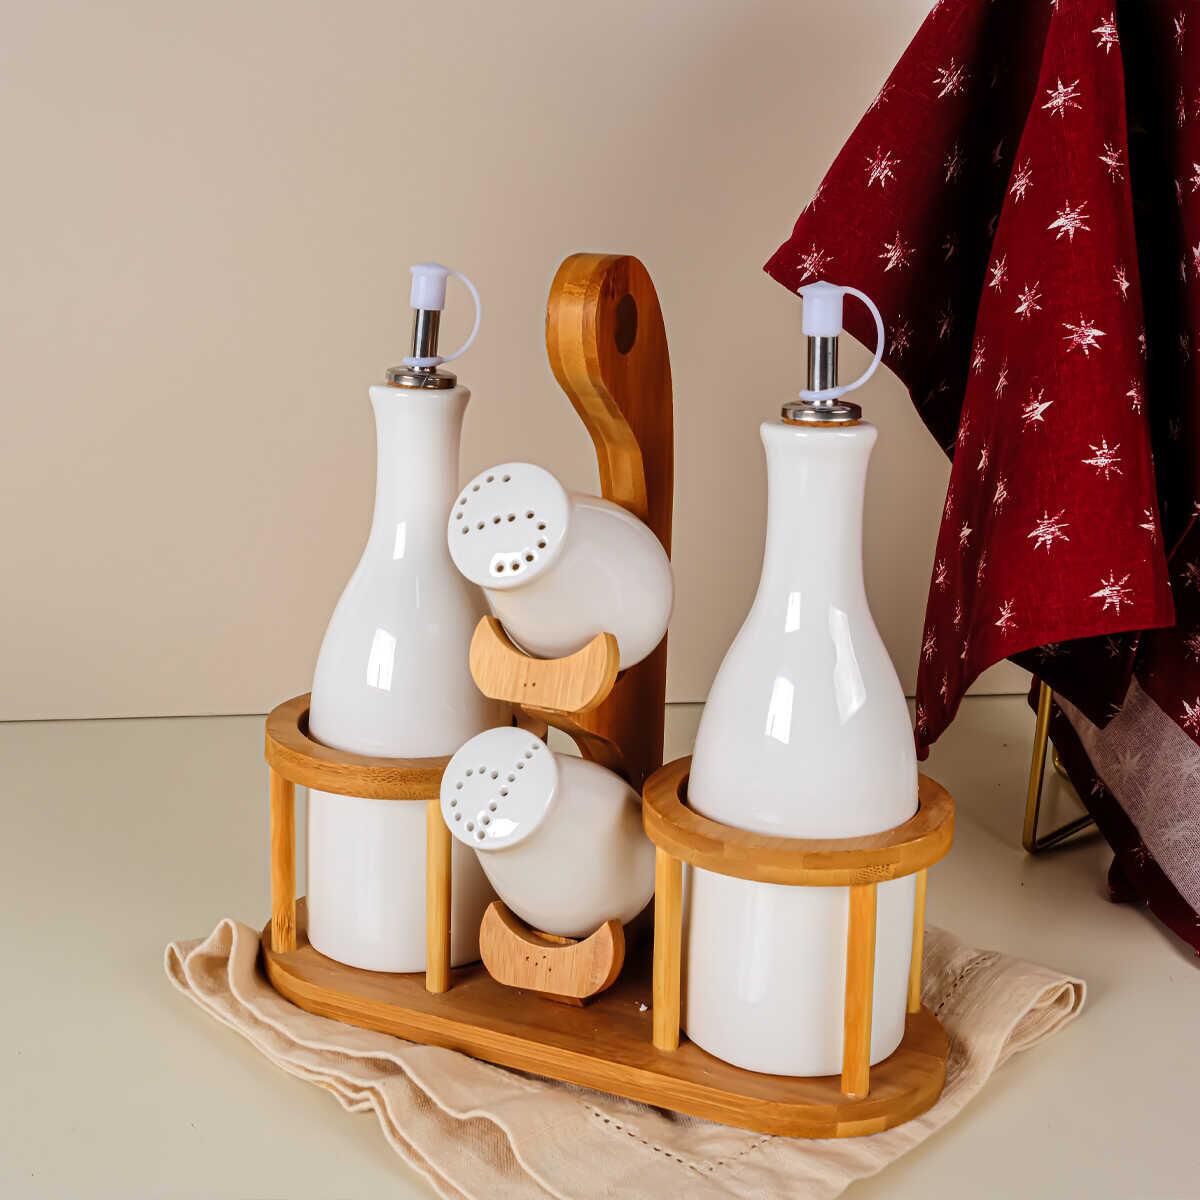 Ultraform Porcelain Oil and Vinegar Bowl Set with Wooden Stand